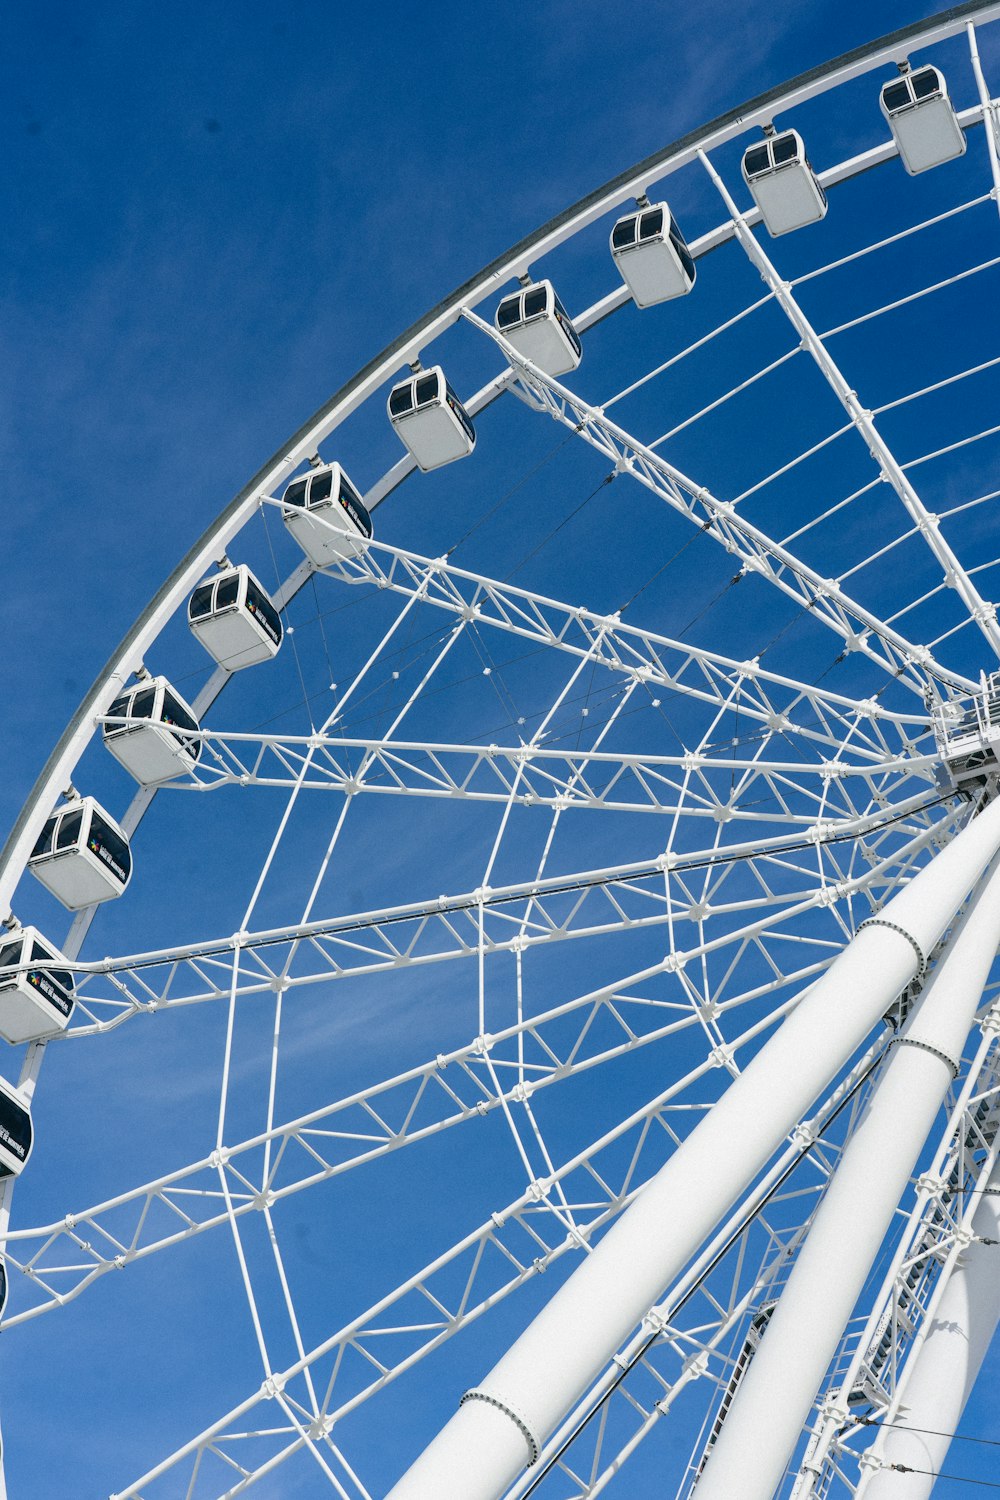 a large ferris wheel against a blue sky